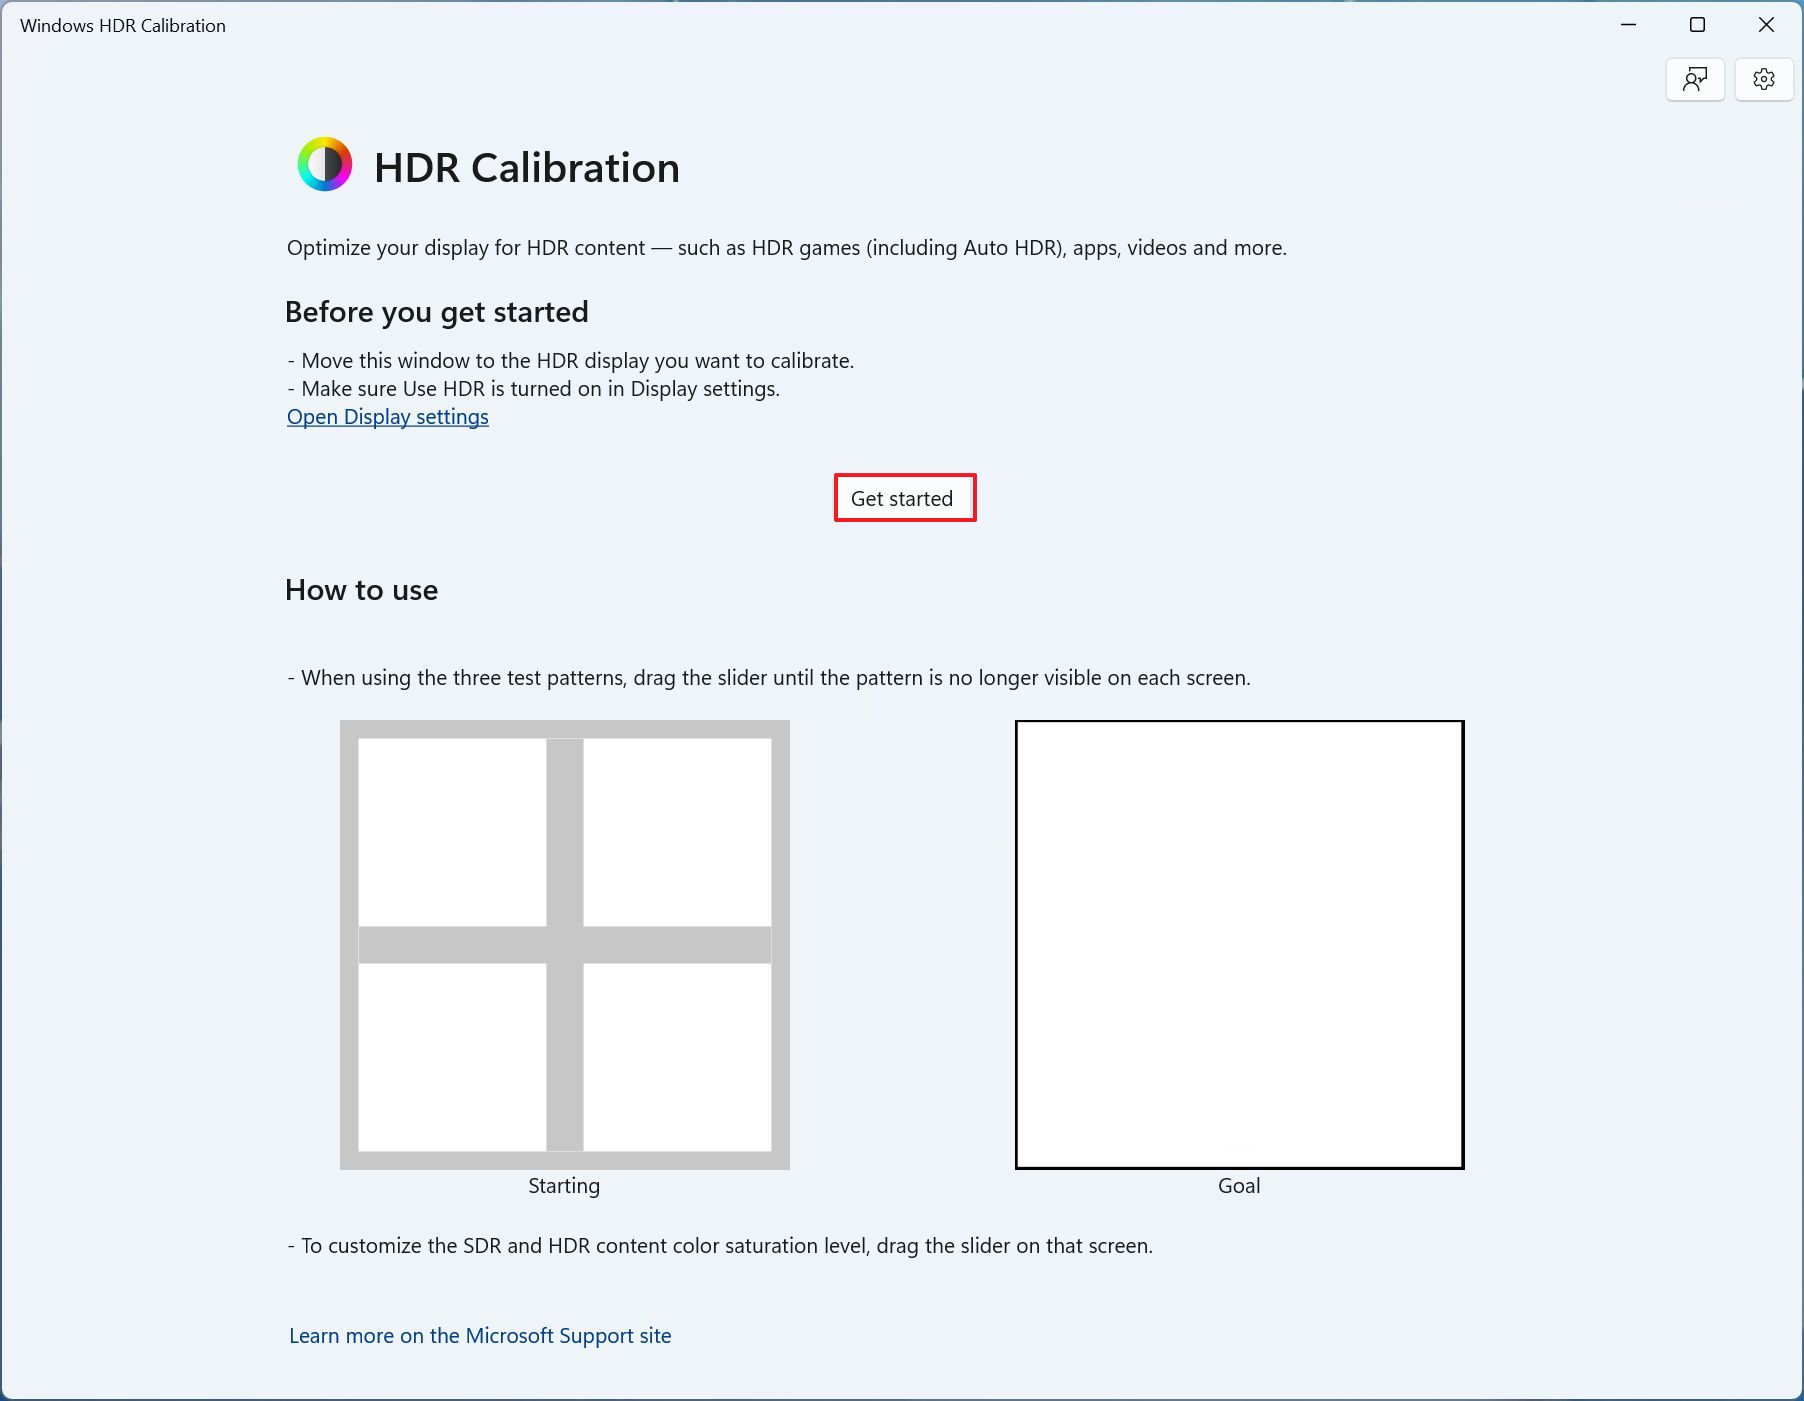 Windows HDR Calibration get started